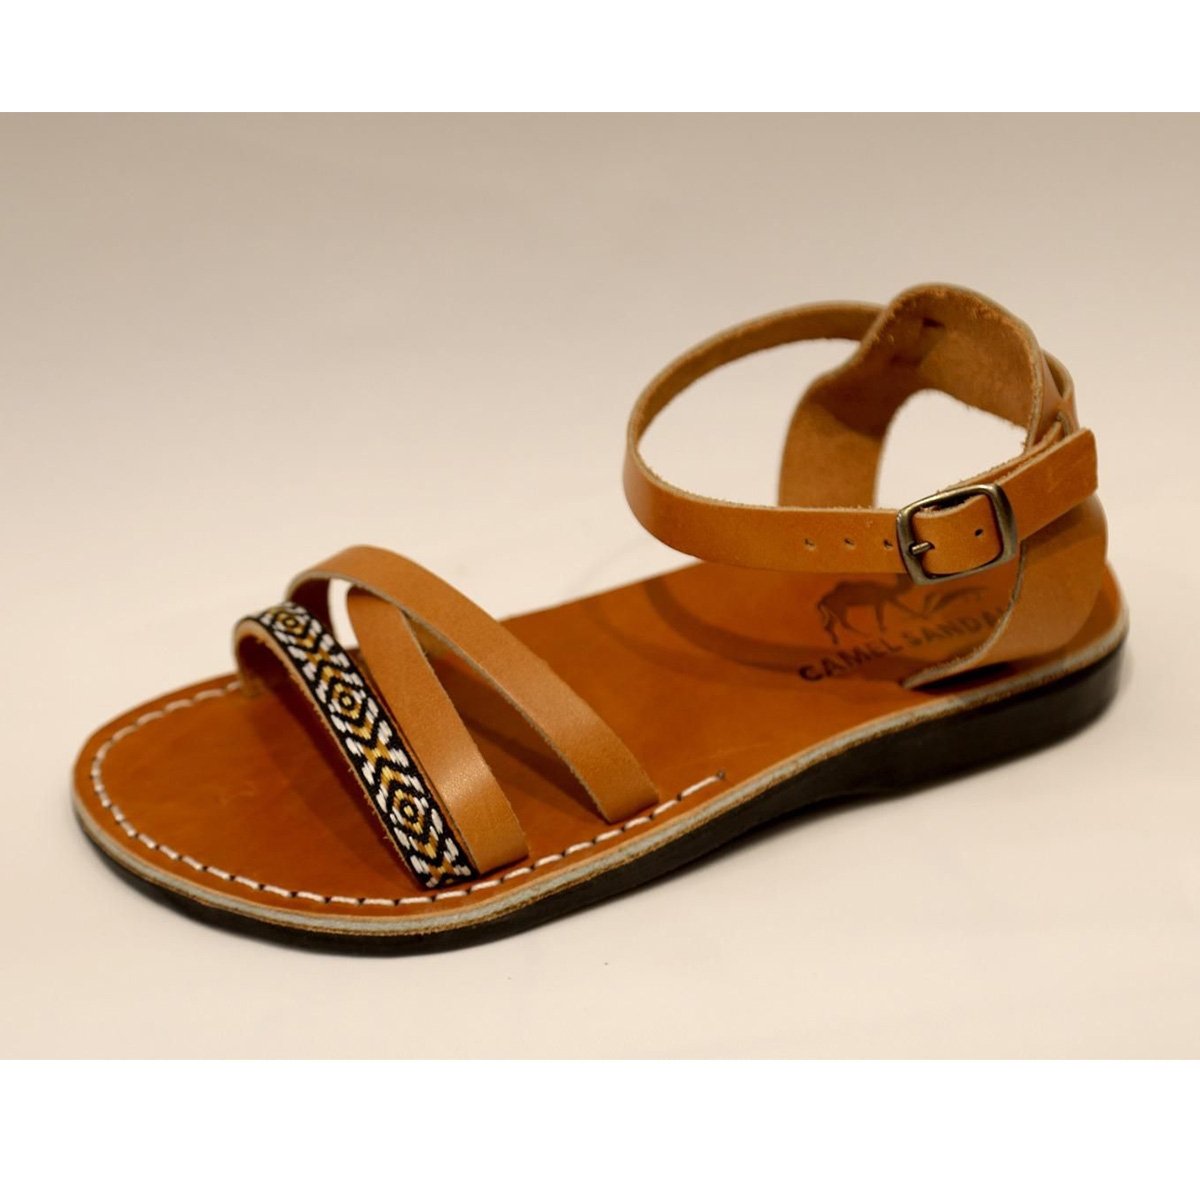 Elizabeth Handmade Leather Women's Sandals - 1